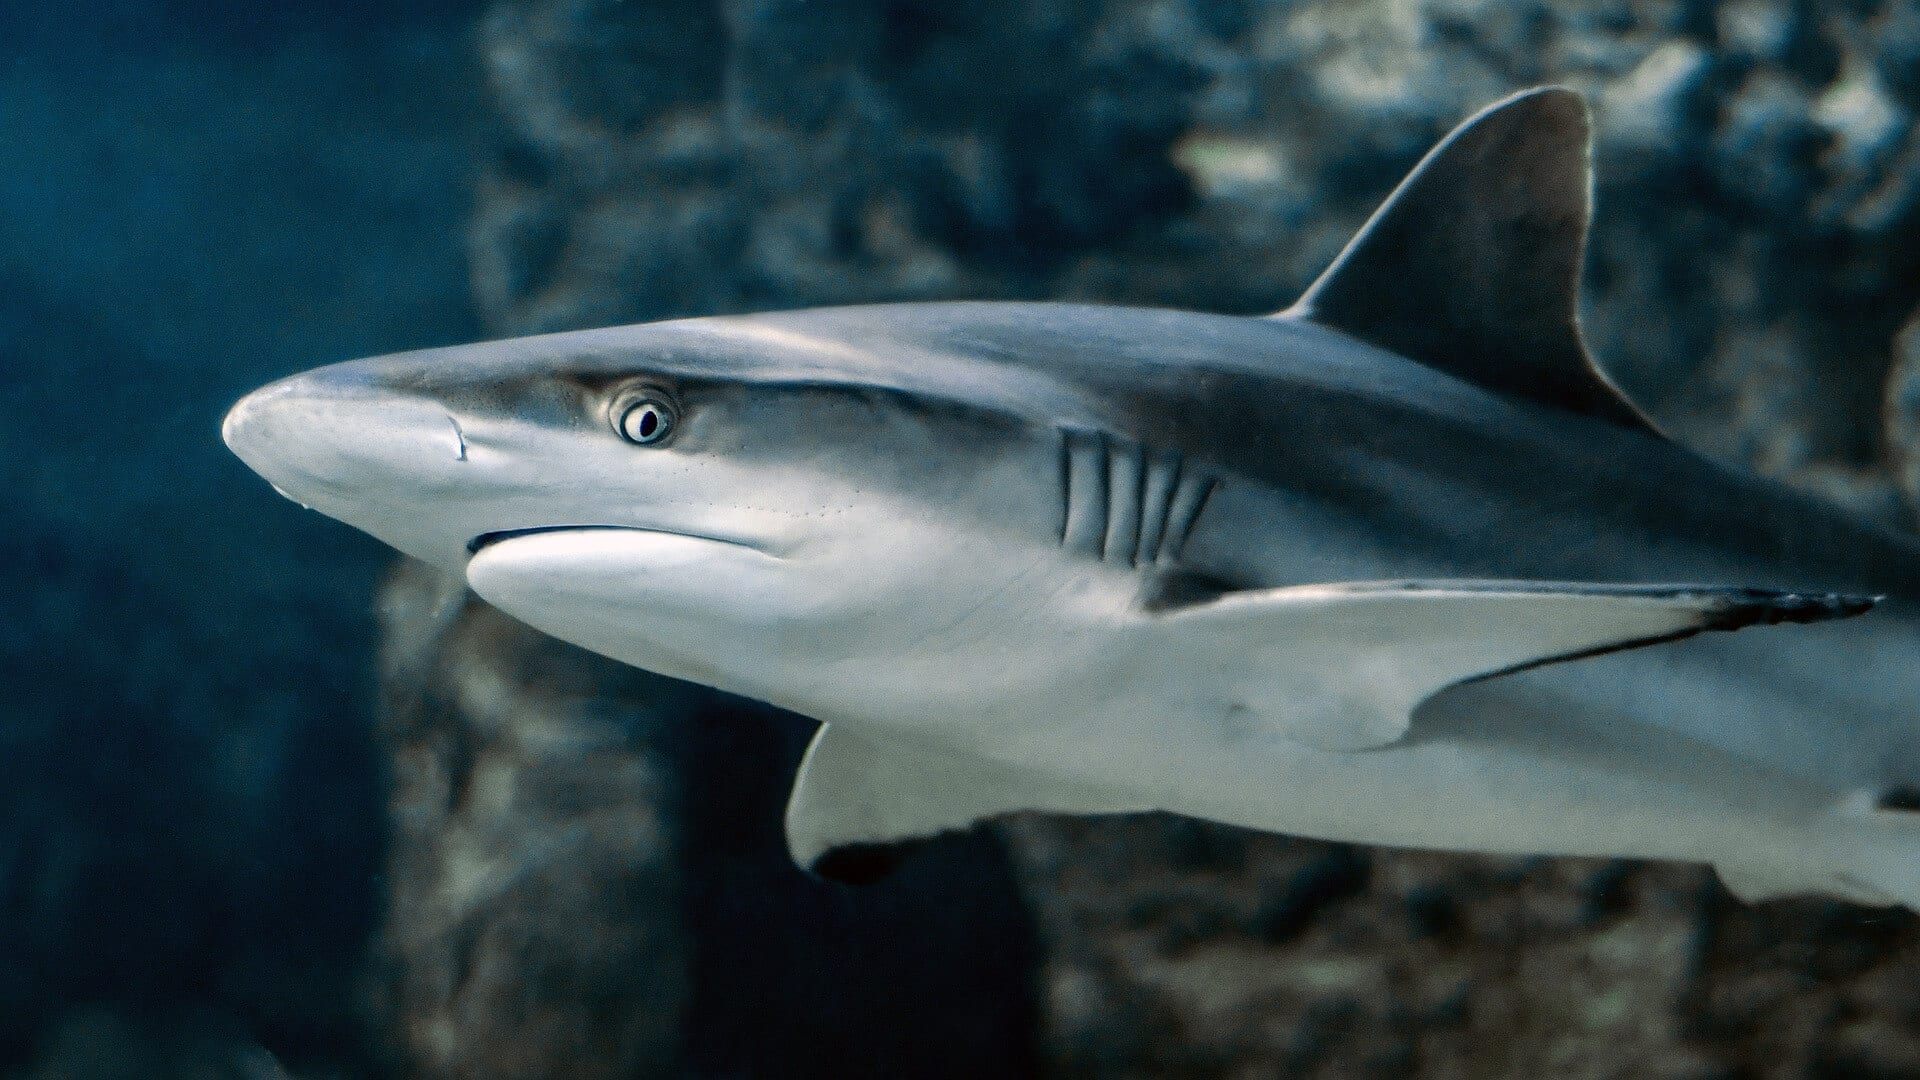 https://pixabay.com/en/shark-fish-eye-animal-water-swim-3197585/